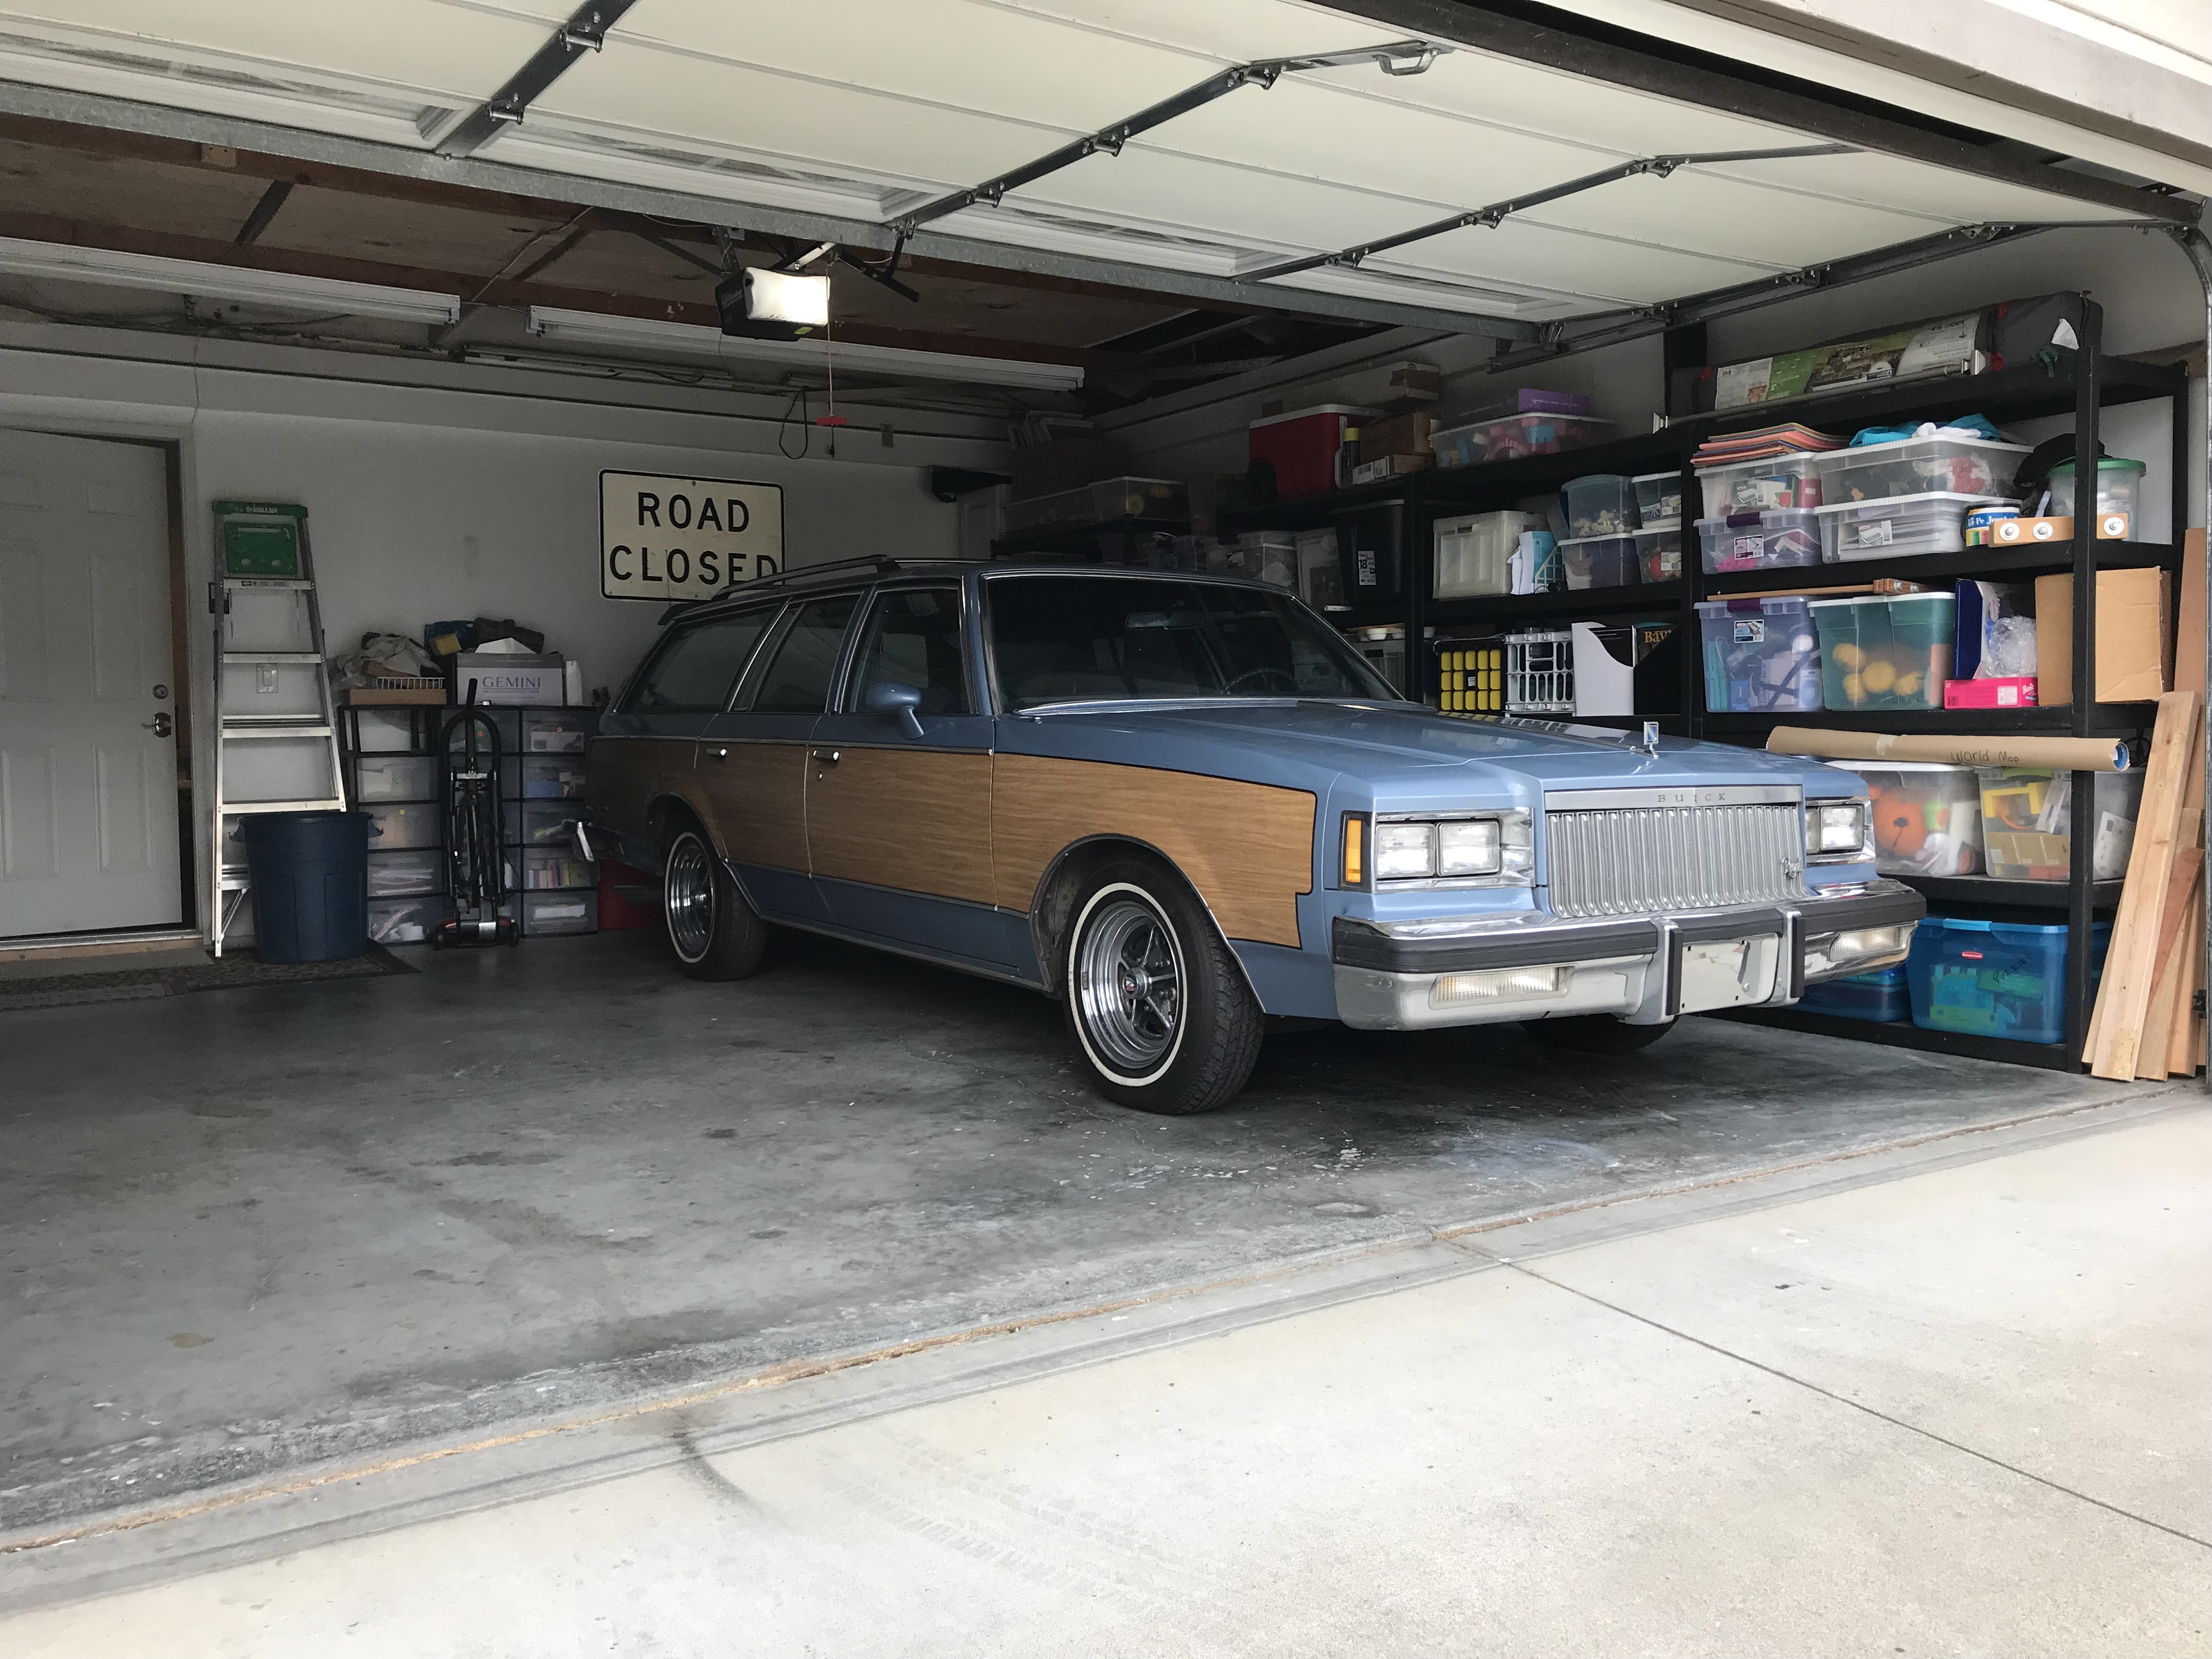 CaliWagon83’s 1983 Buick Regal Wagon in garage Orange County